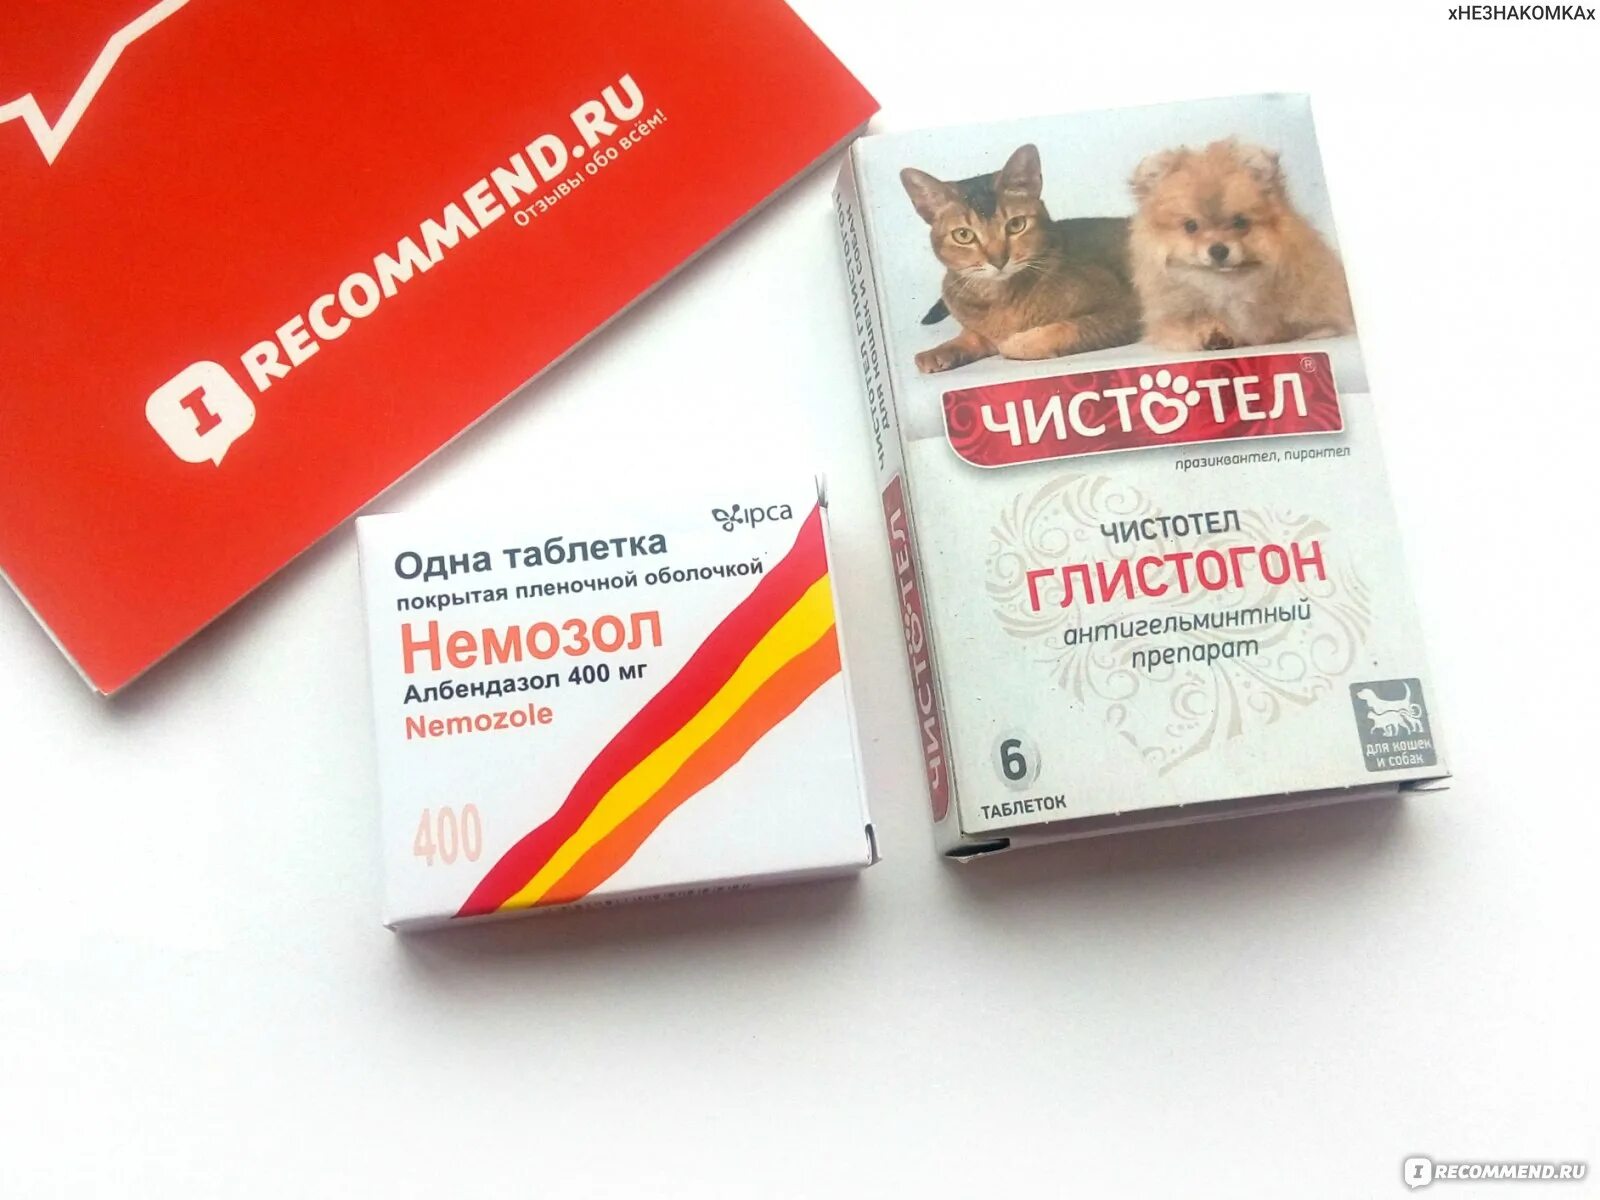 Глистогон немозол. Таблетки от глистов глистогон для кошек. Таблетки от гельминтов для кошек широкого спектра. Немозол для кошек. Лекарства от глистов широкого спектра